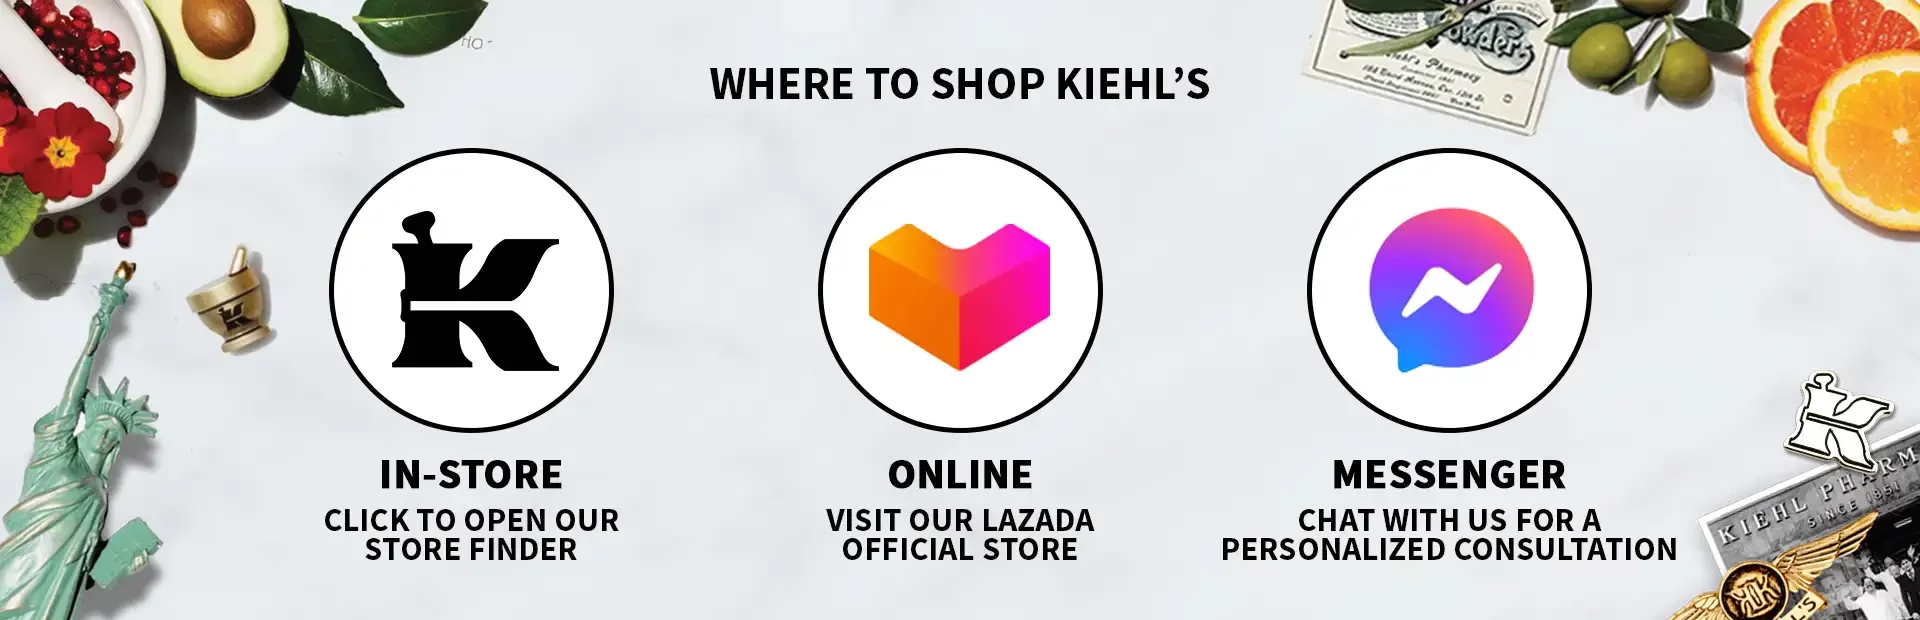 Where to shop Kiehl's banner